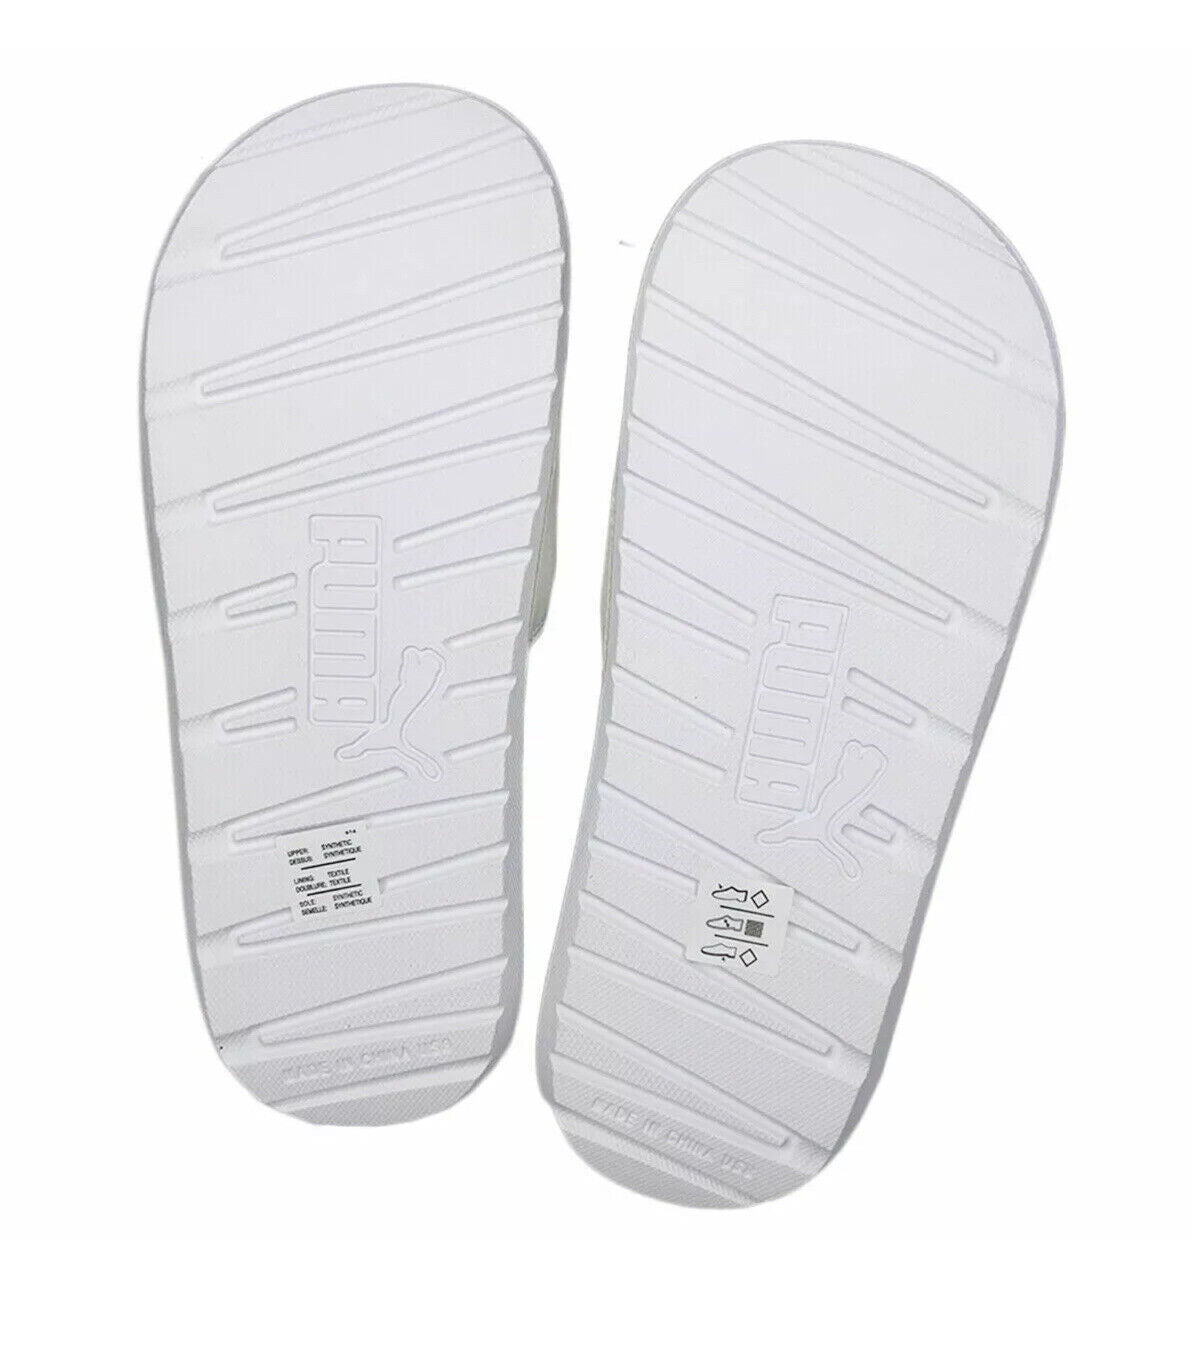 PUMA Women's Cool Cat Sport Slides Sandals White/Rose Gold Size 7